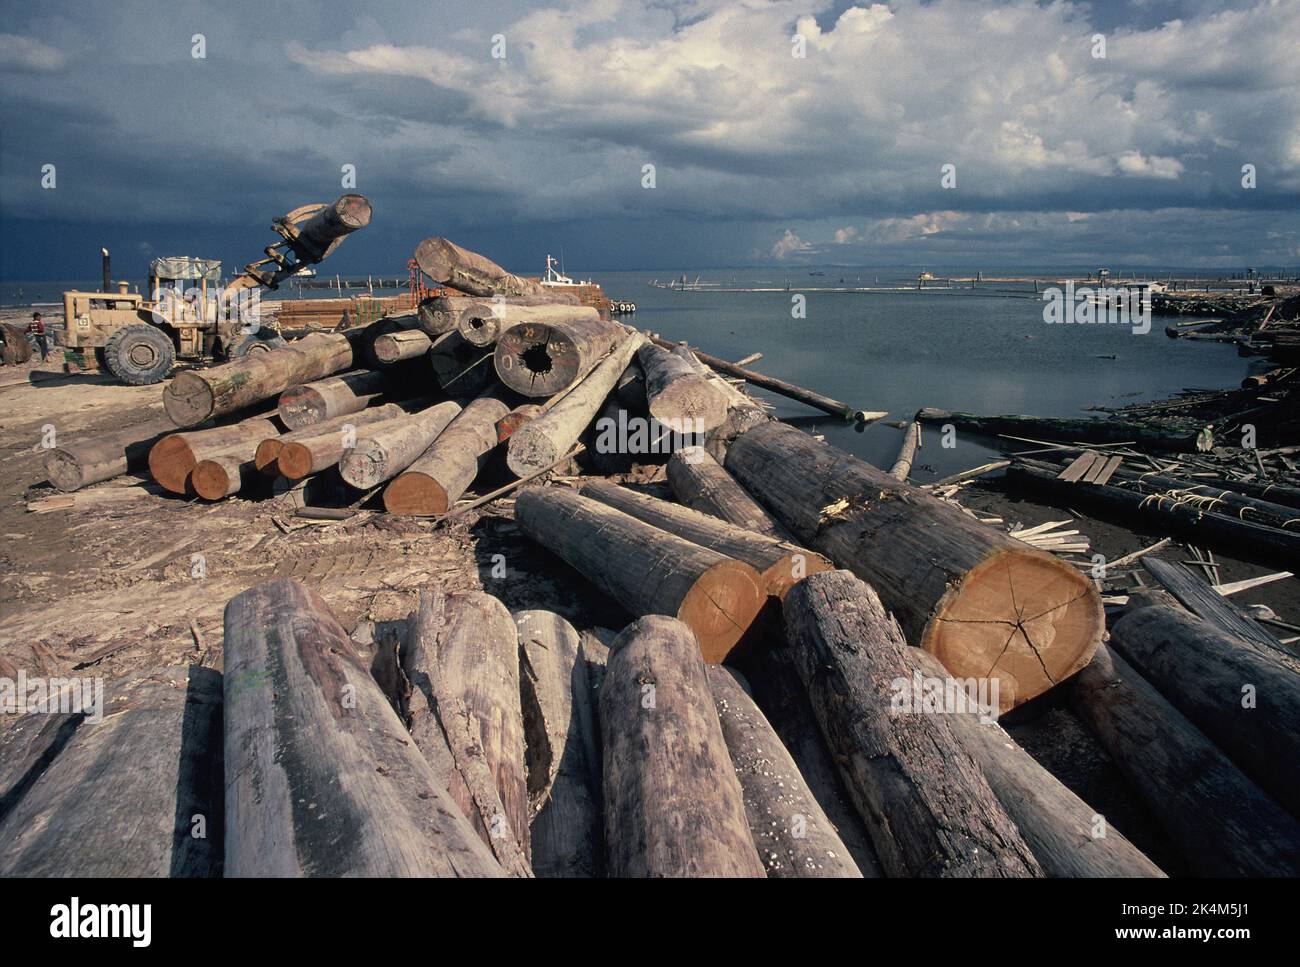 Malaysia. Sabah coast. Logging industry. Vehicle stacking logs on quayside. Stock Photo